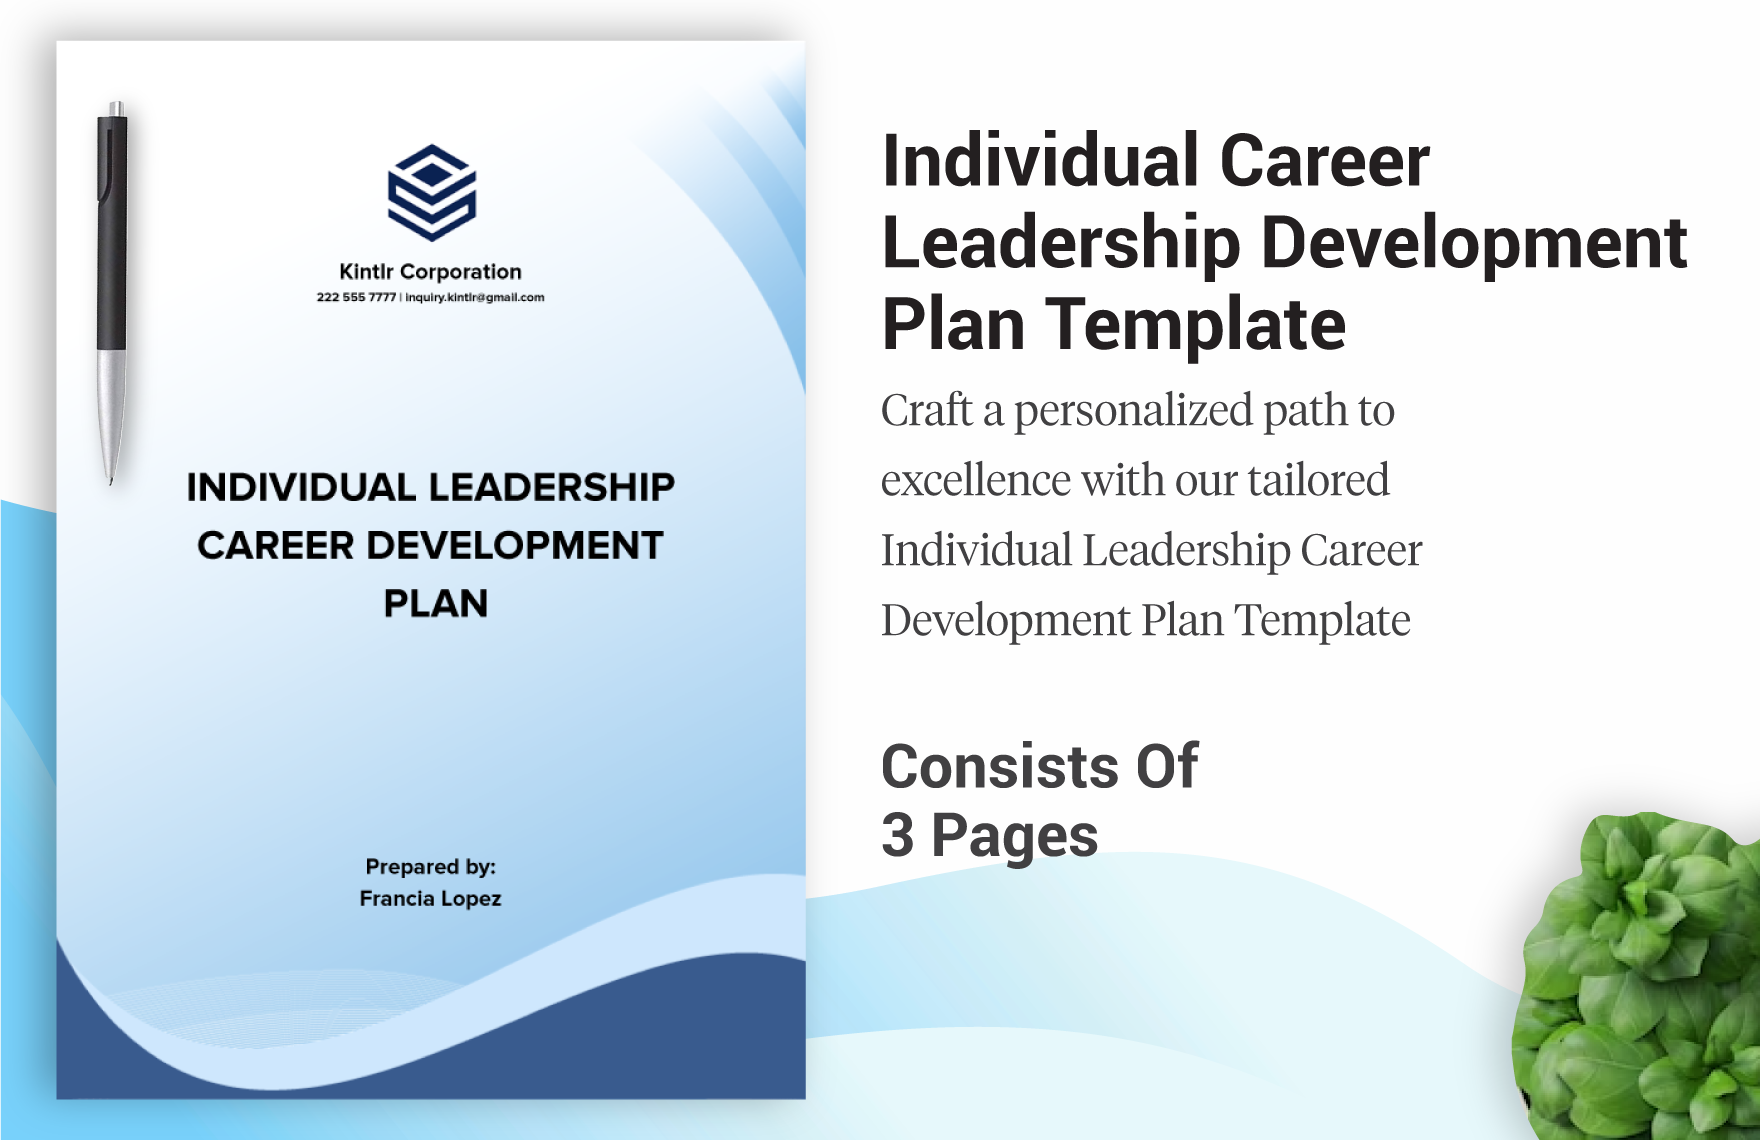 Individual Career Leadership Development Plan Template